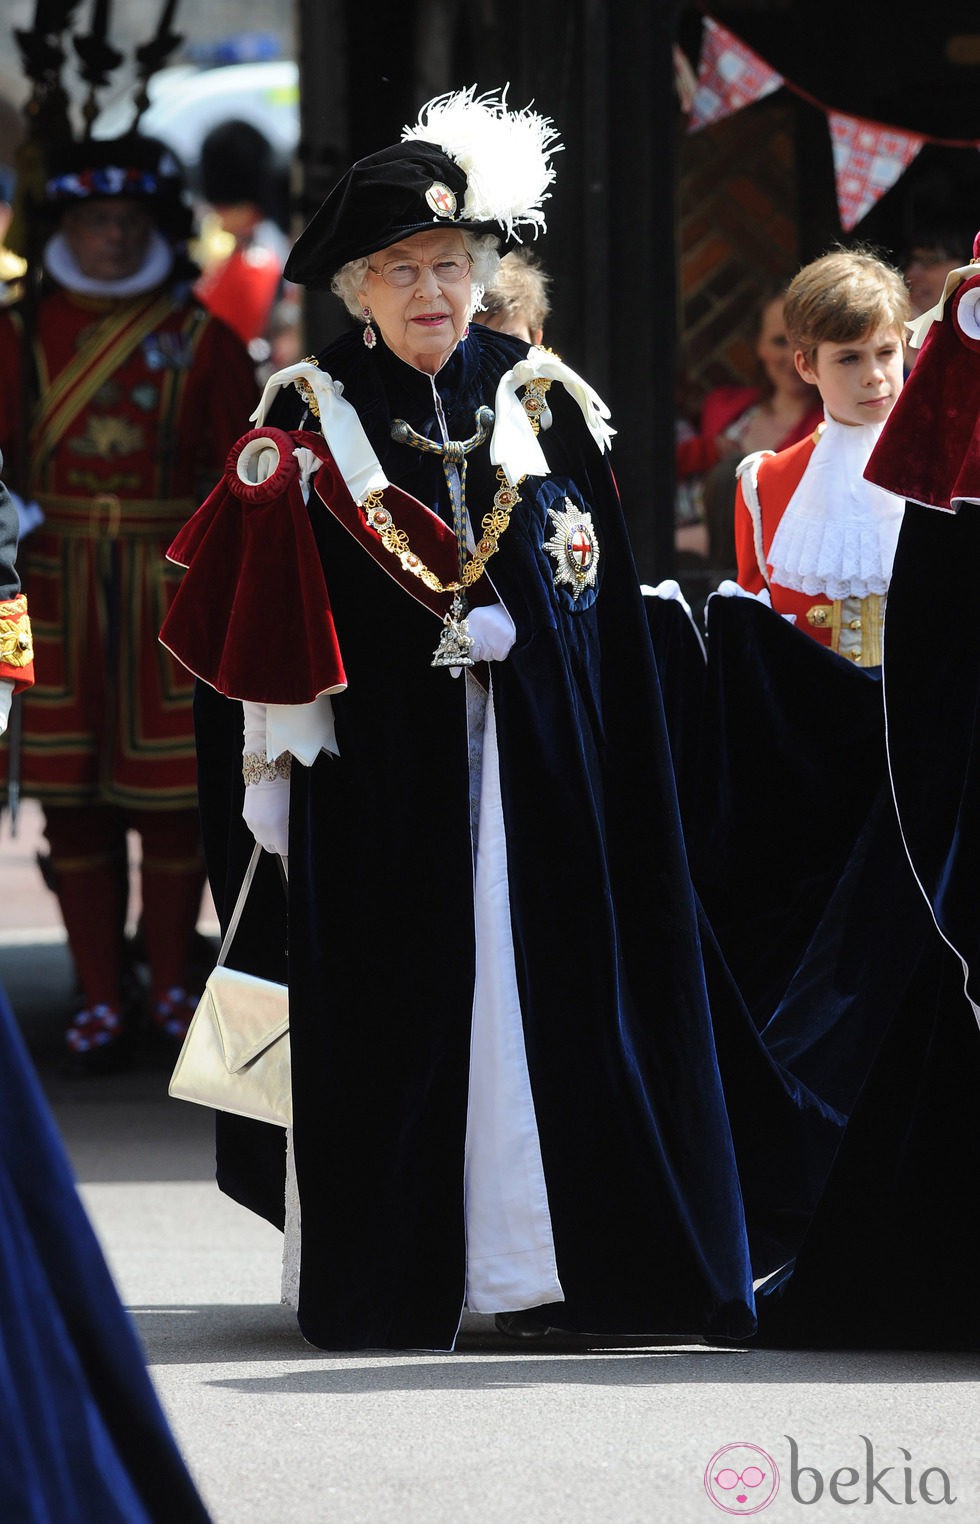 La Reina Isabel II en la ceremonia de la Orden de la Jarretera